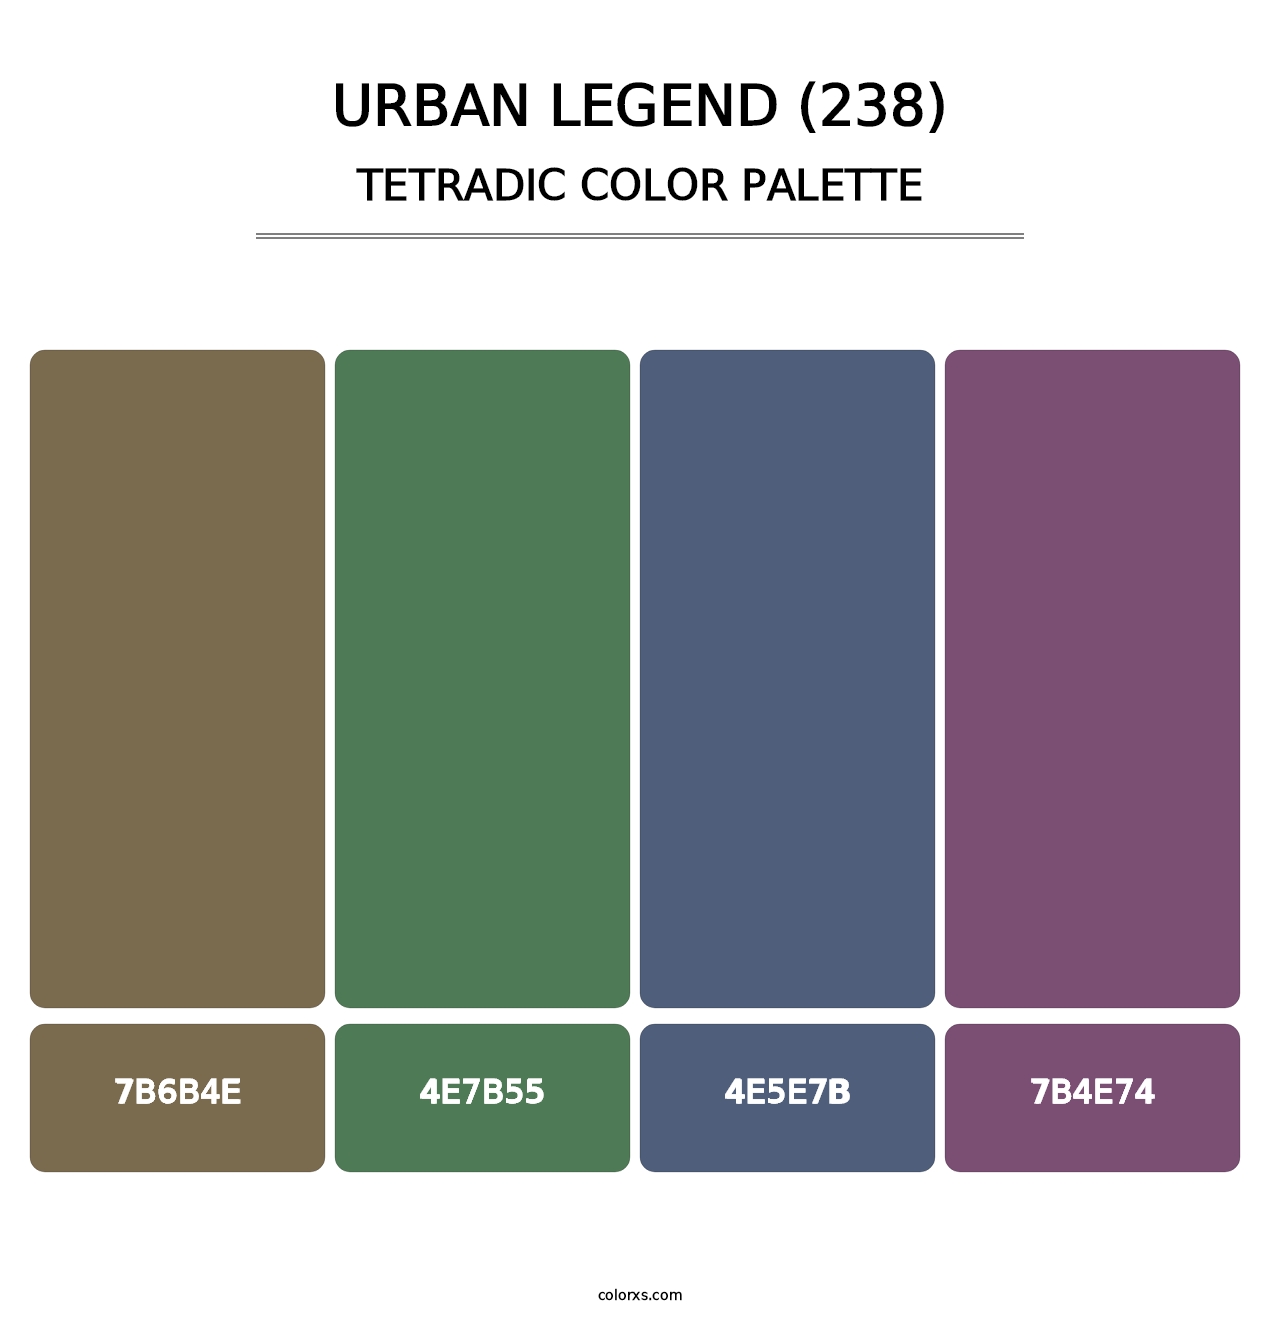 Urban Legend (238) - Tetradic Color Palette